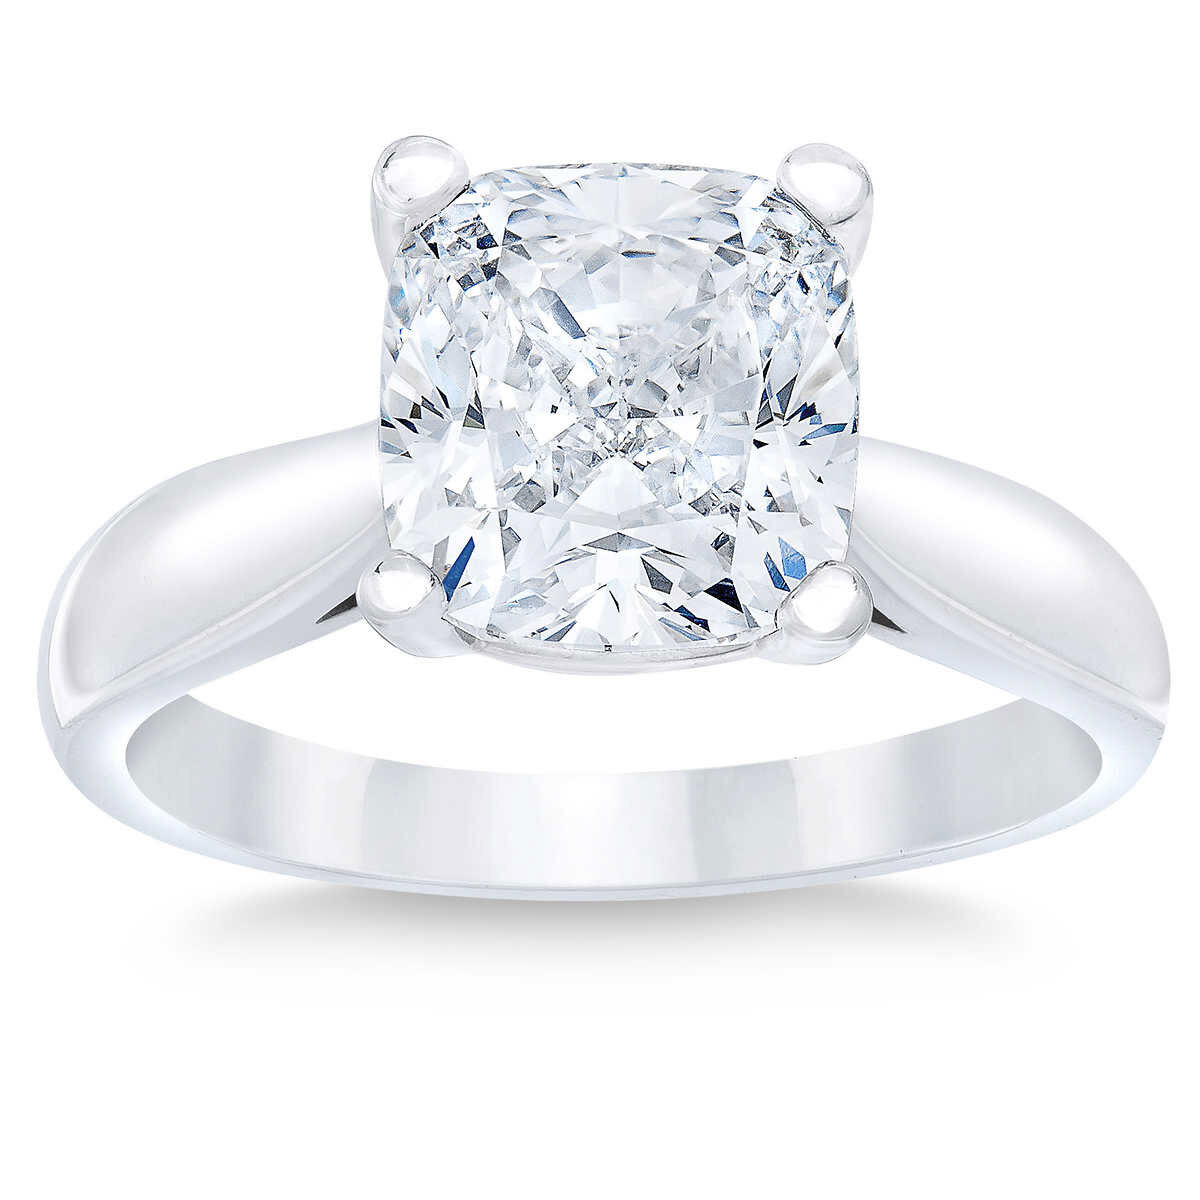 5.04ct Cushion Cut Diamond Solitaire Ring, Platinum